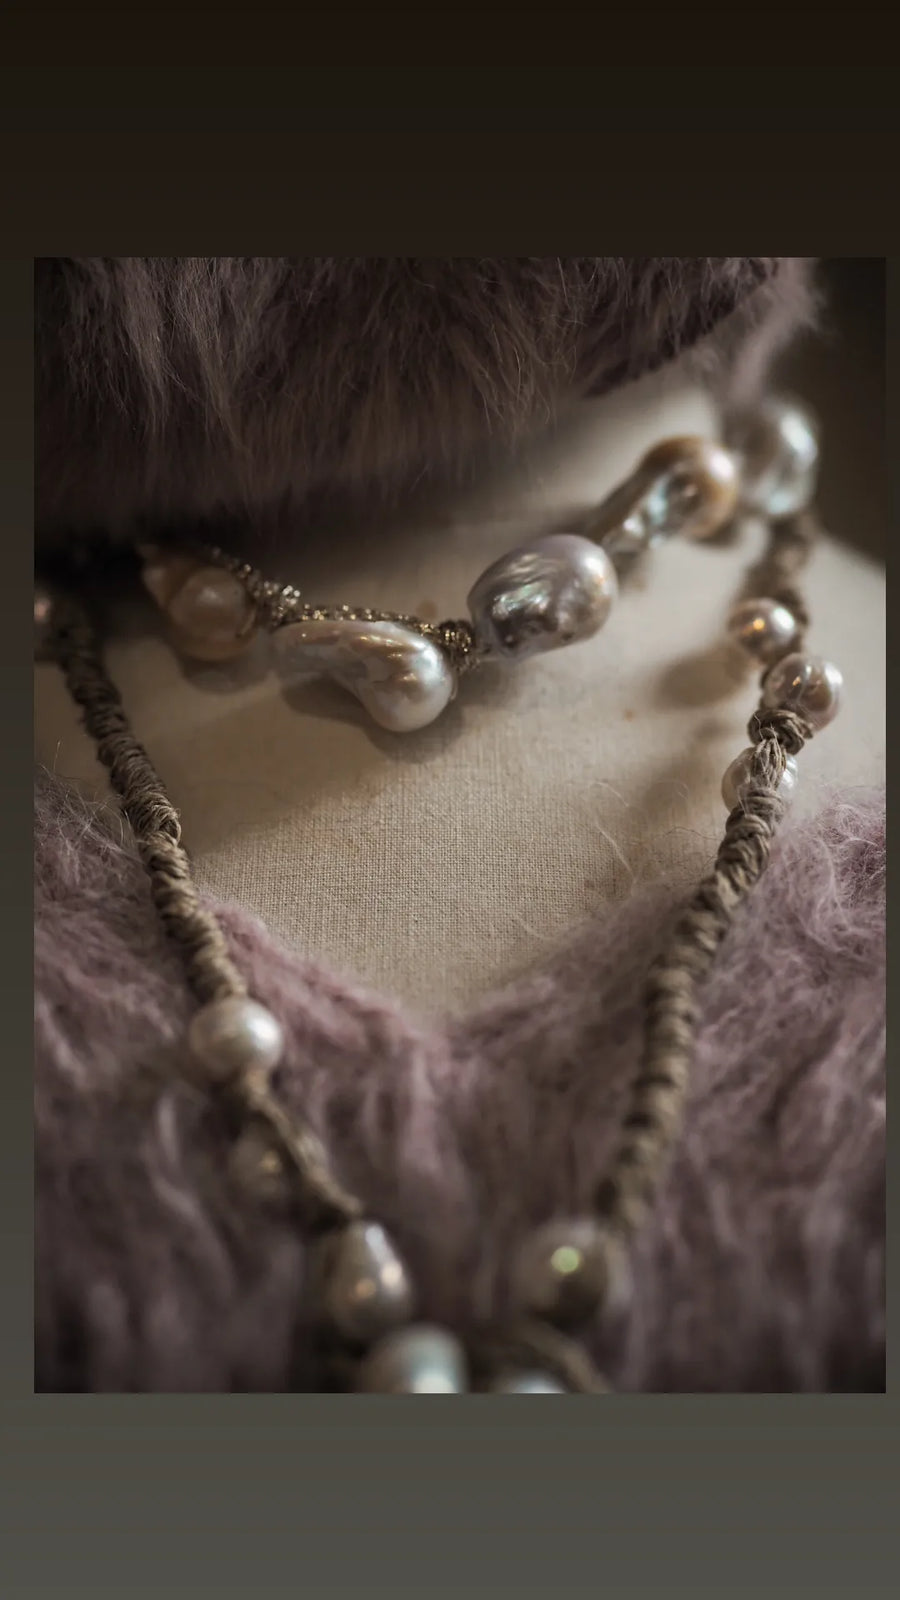 South Sea Baroque Pearl Necklace With Silk (Multicolour Pearls)